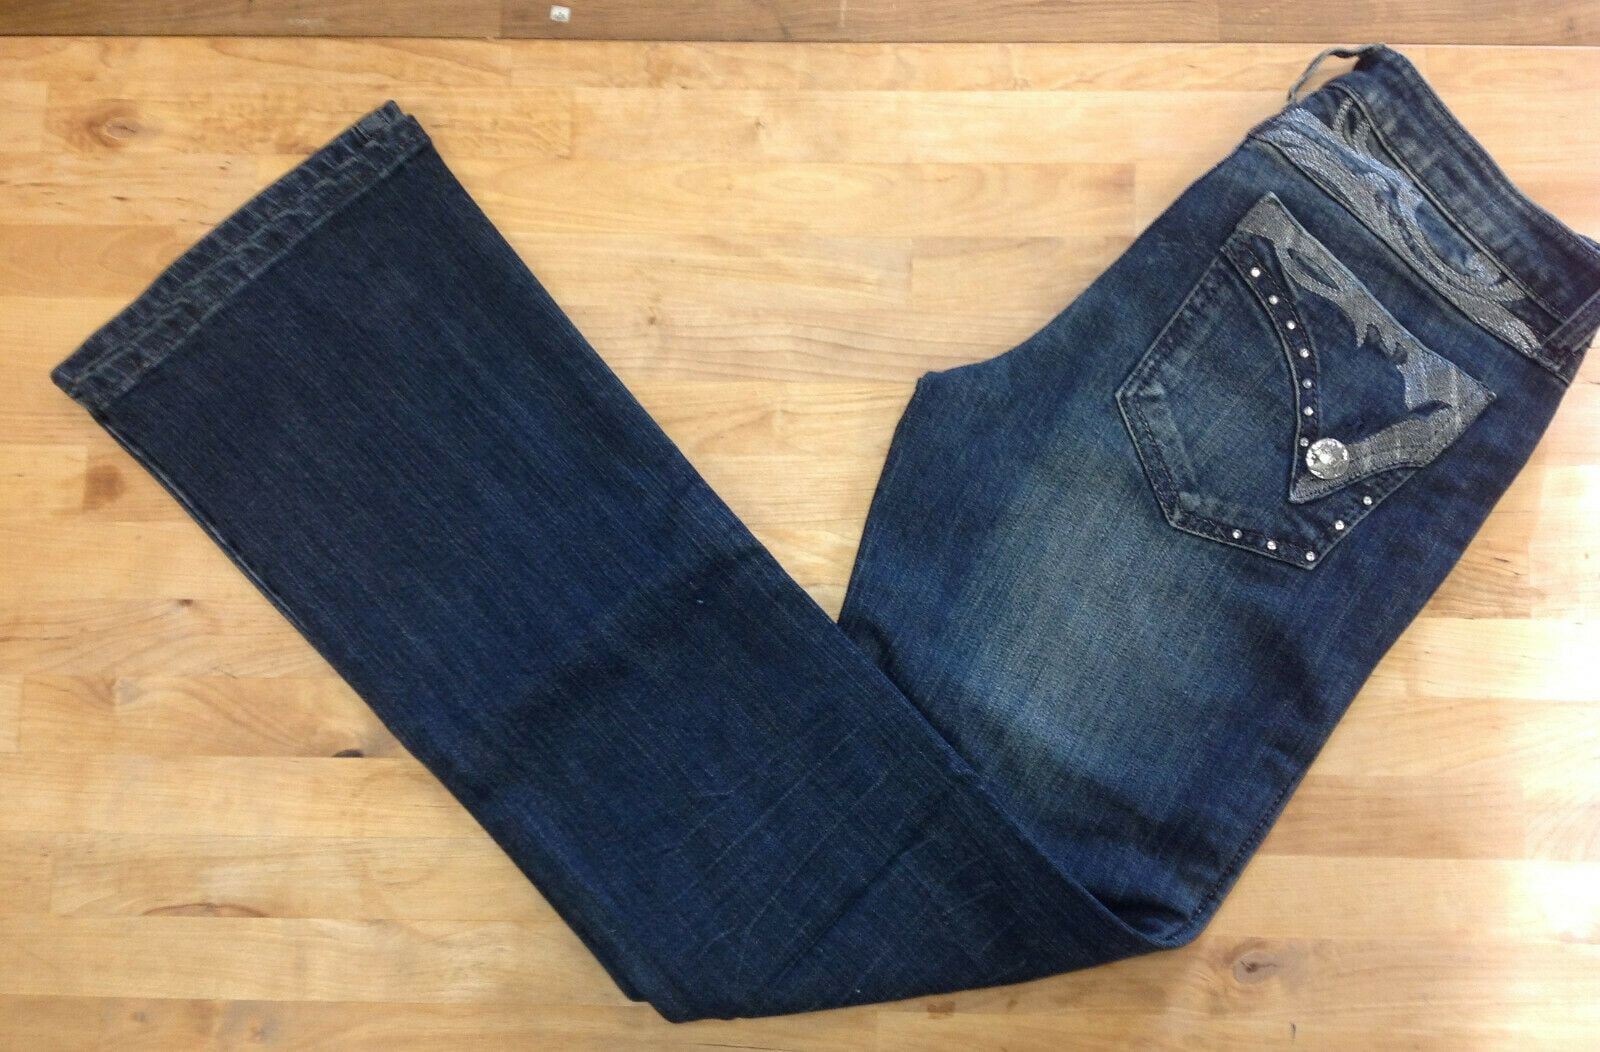 wrangler jeans 99 cotton 1 spandex